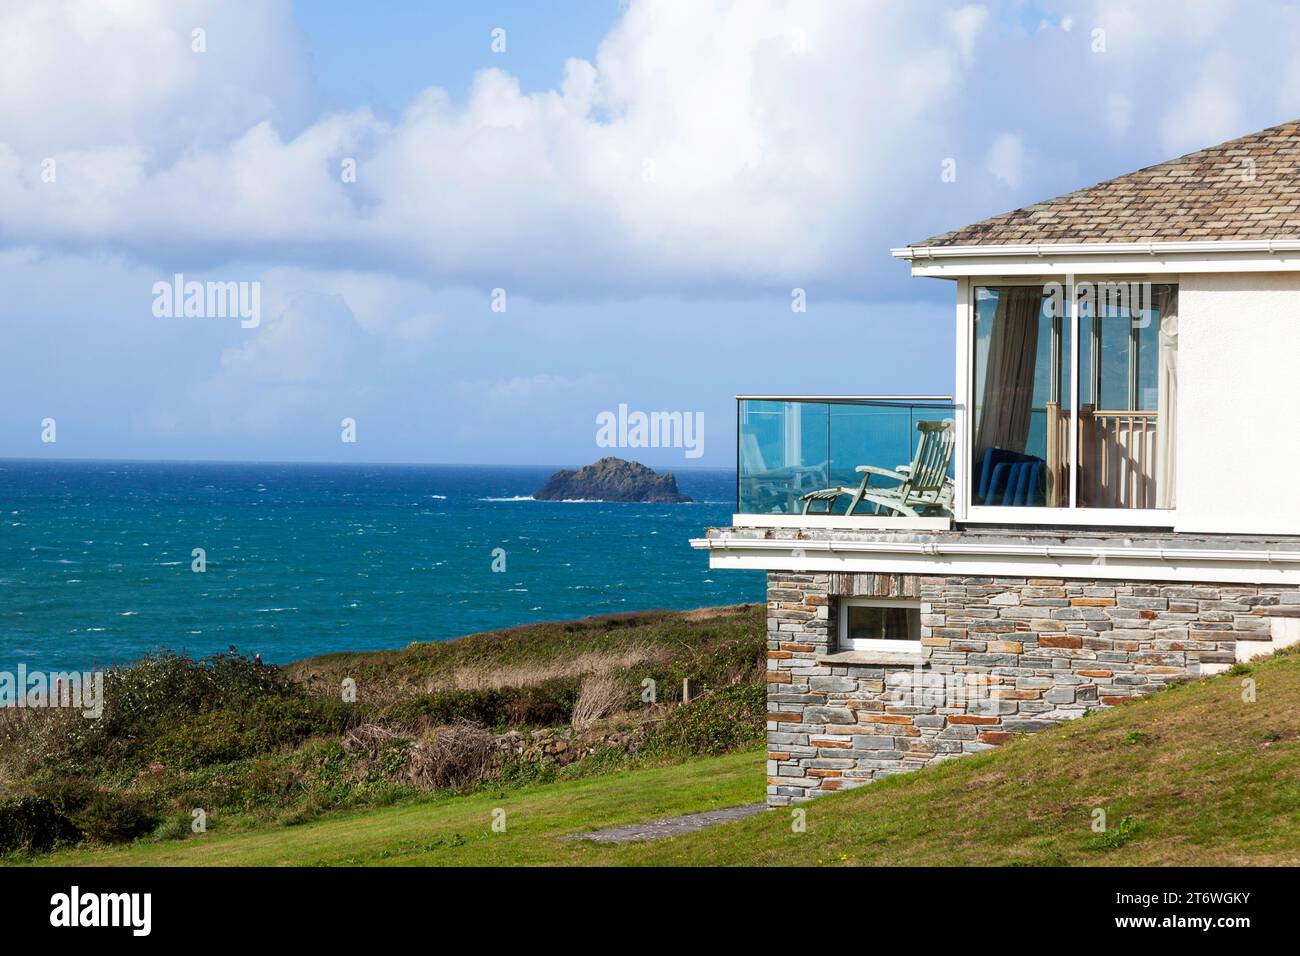 A holiday home overlooking the Atlantic Ocean on the North Cornwall coast, England,U.K. Stock Photo